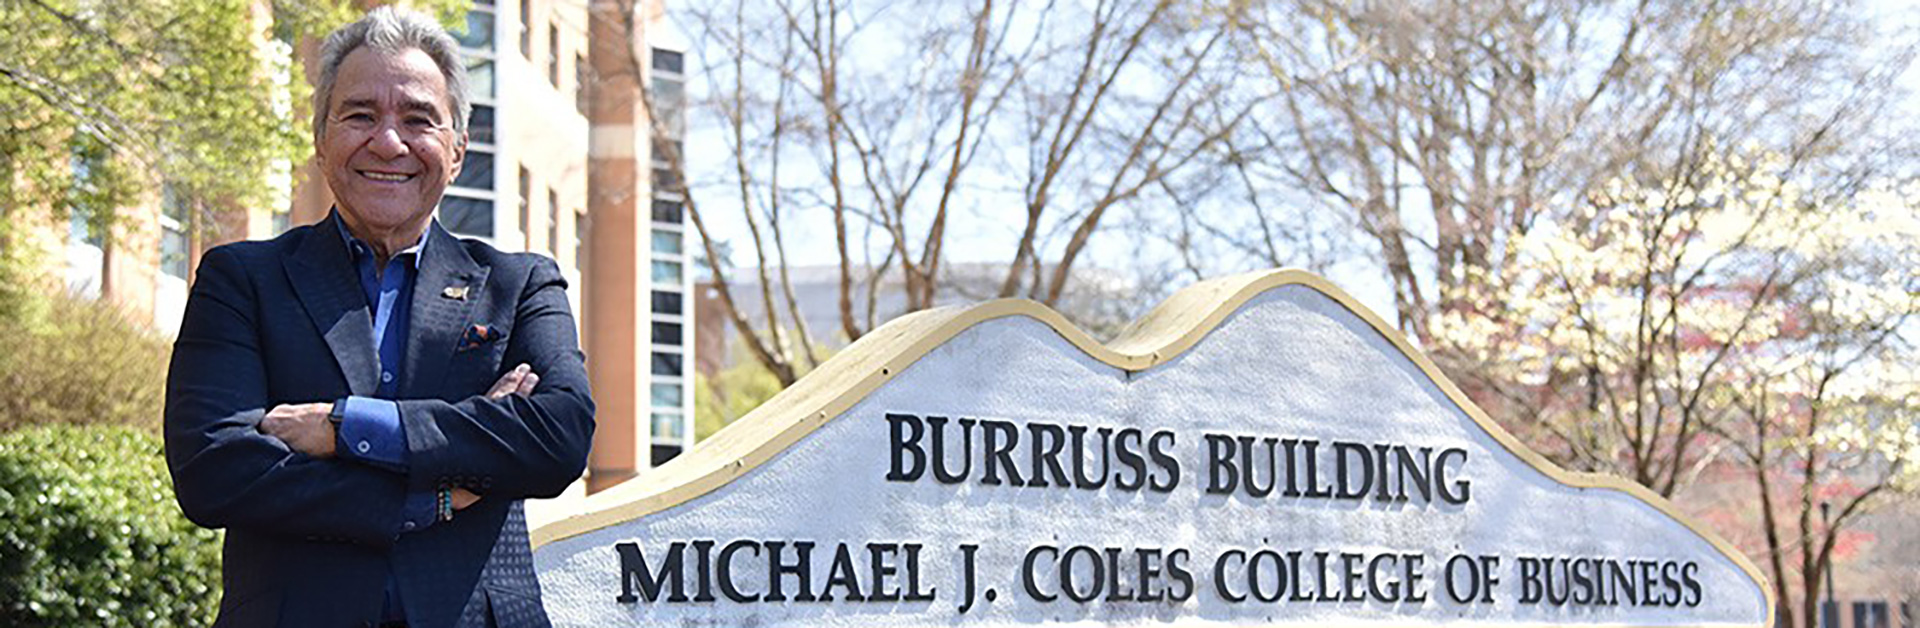 Michael Coles at KSU Coles College of Business.